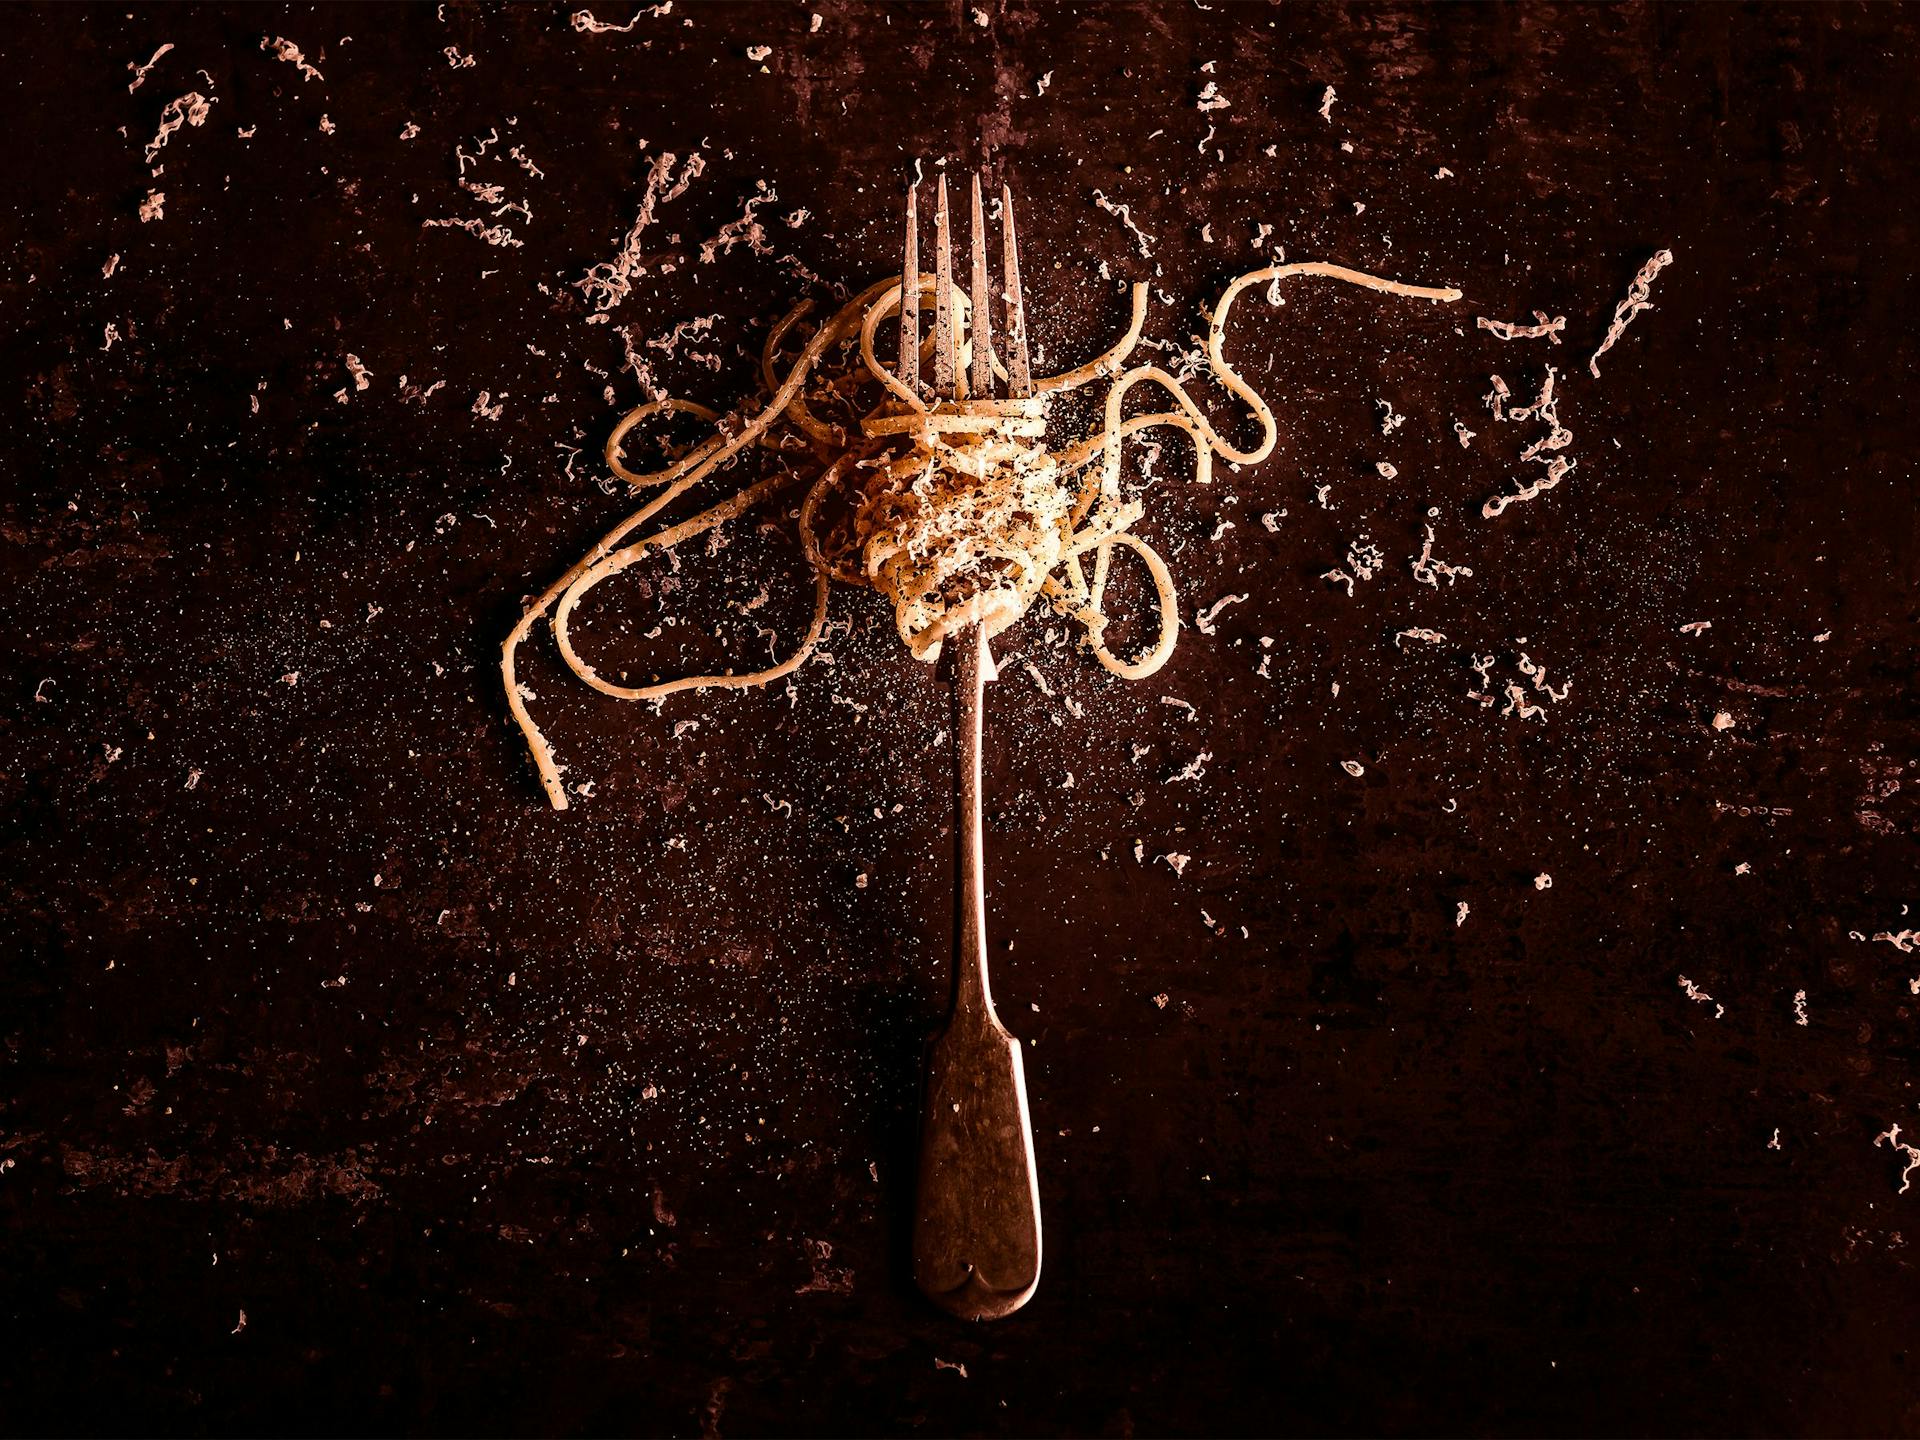 A fork enwrapped in spaghetti